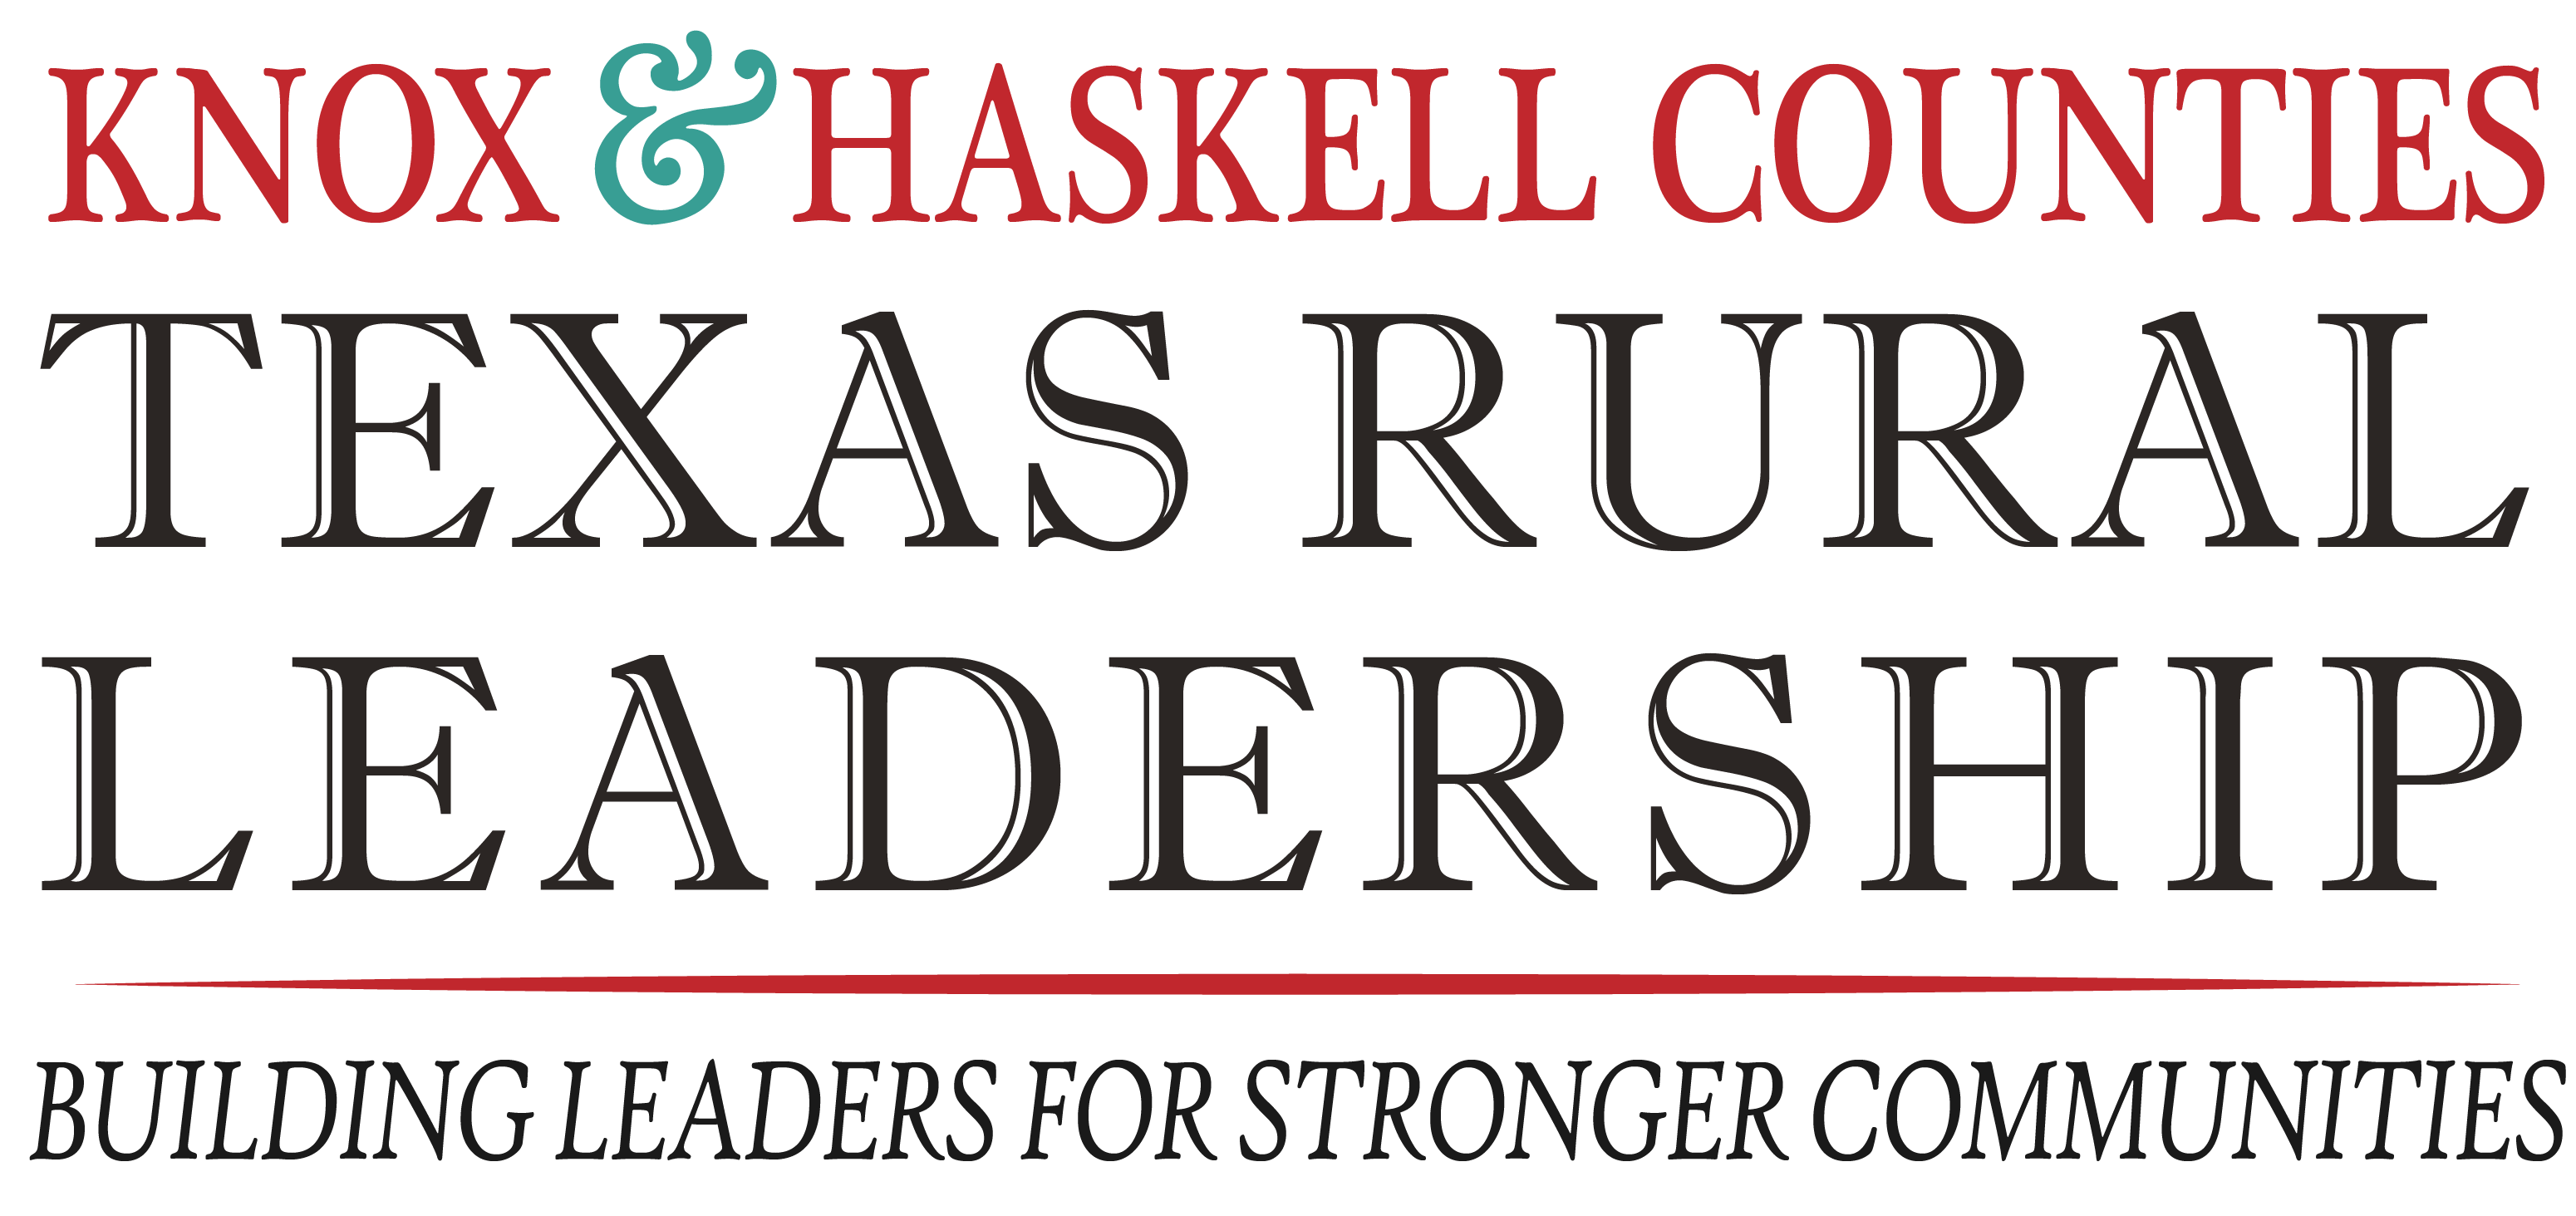 Haskell Logo - KNOX HASKELL LOGO 03, TX